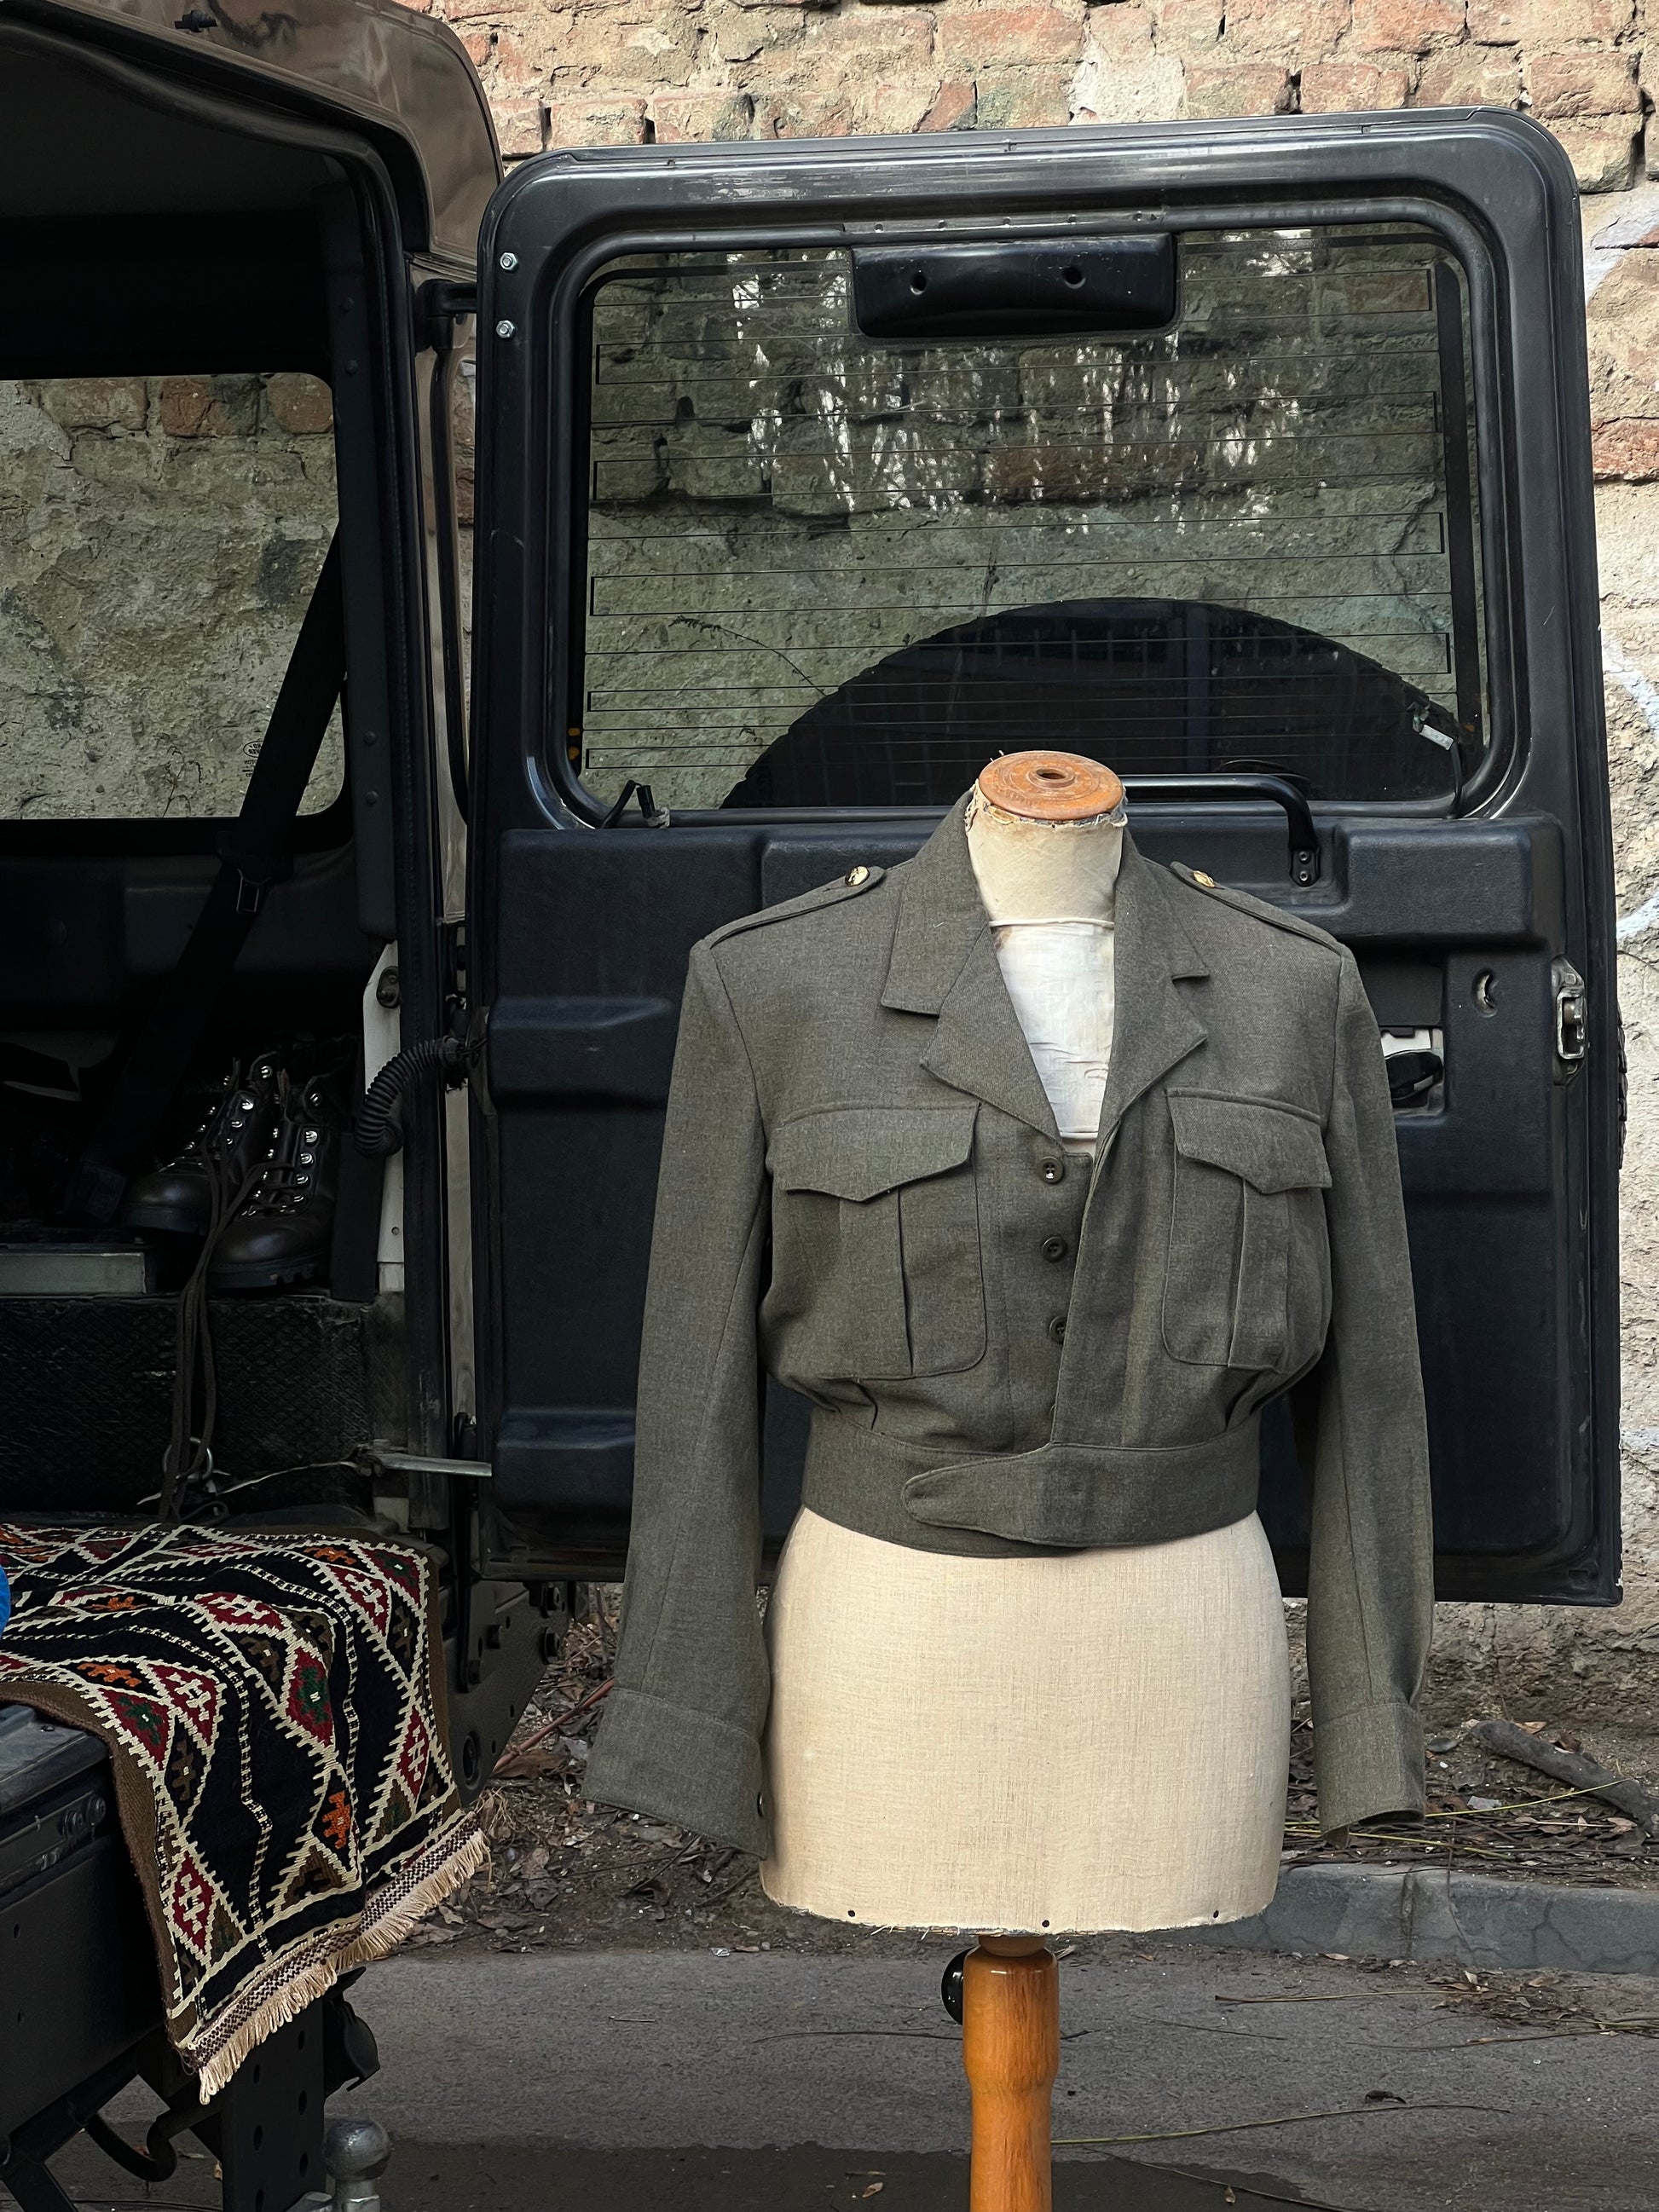 Army women’s jacket beside an army truck